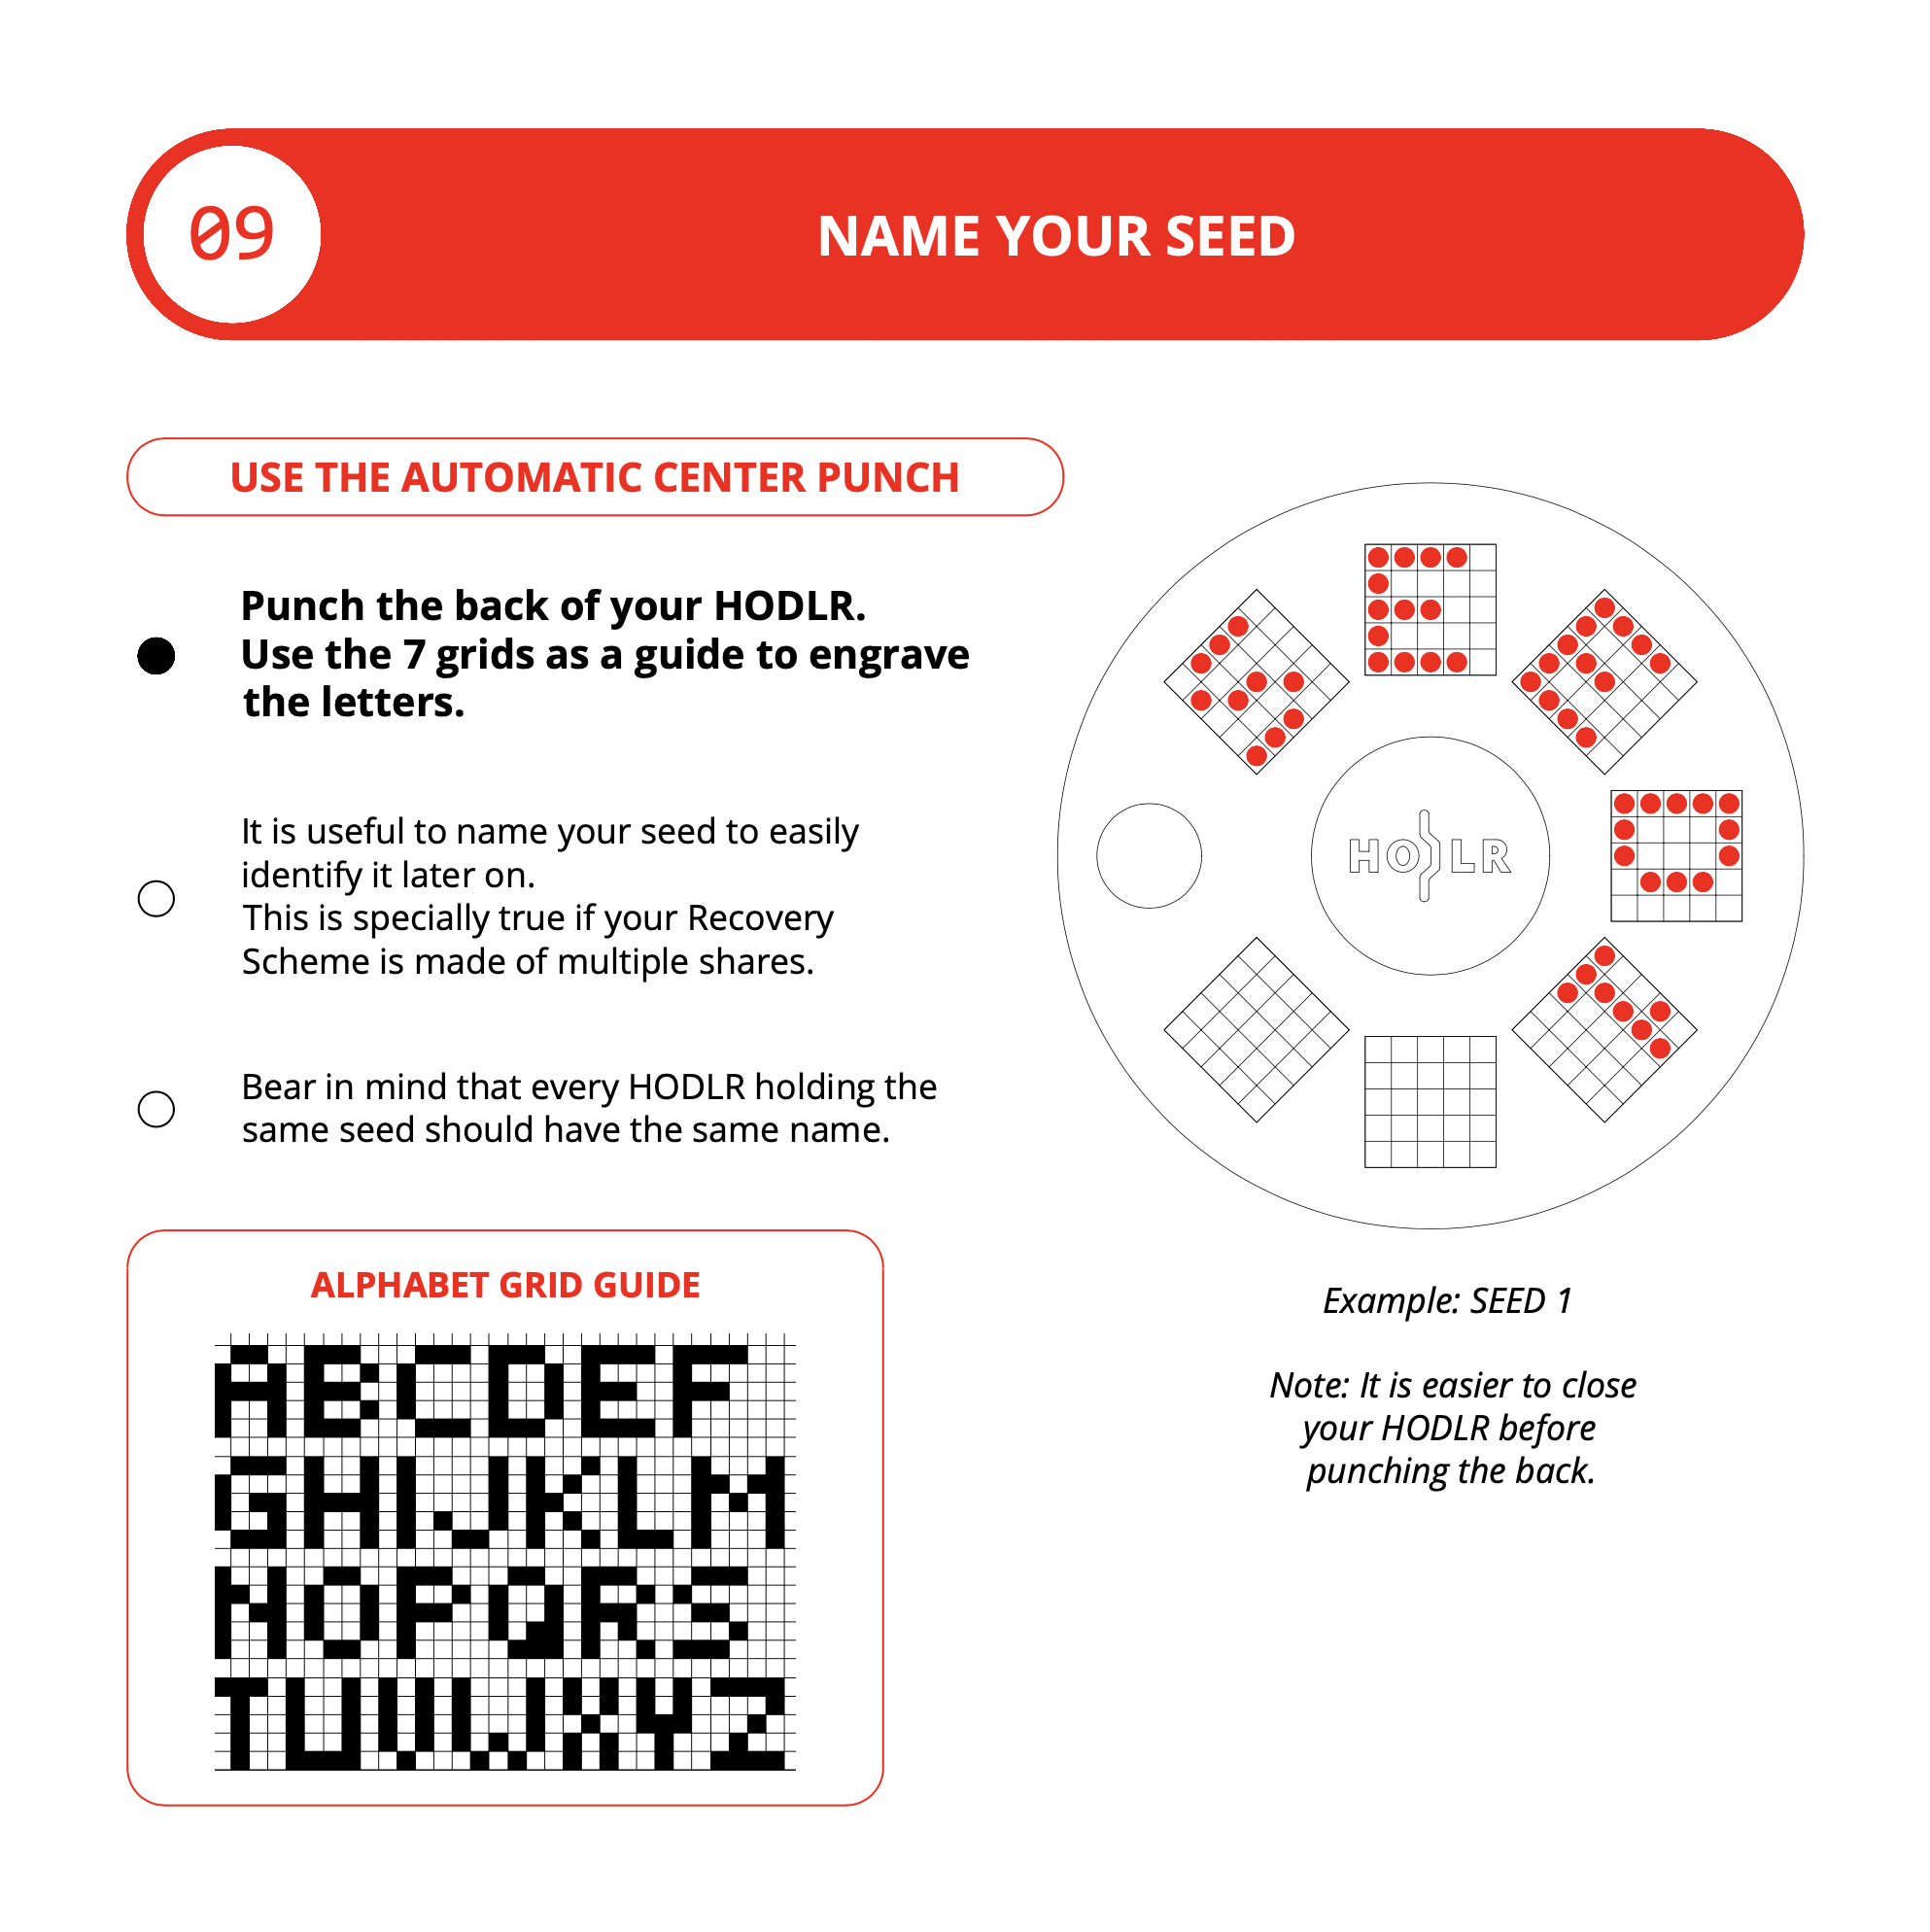 HODLR Disks Protocol - Step 9 - Name your seed